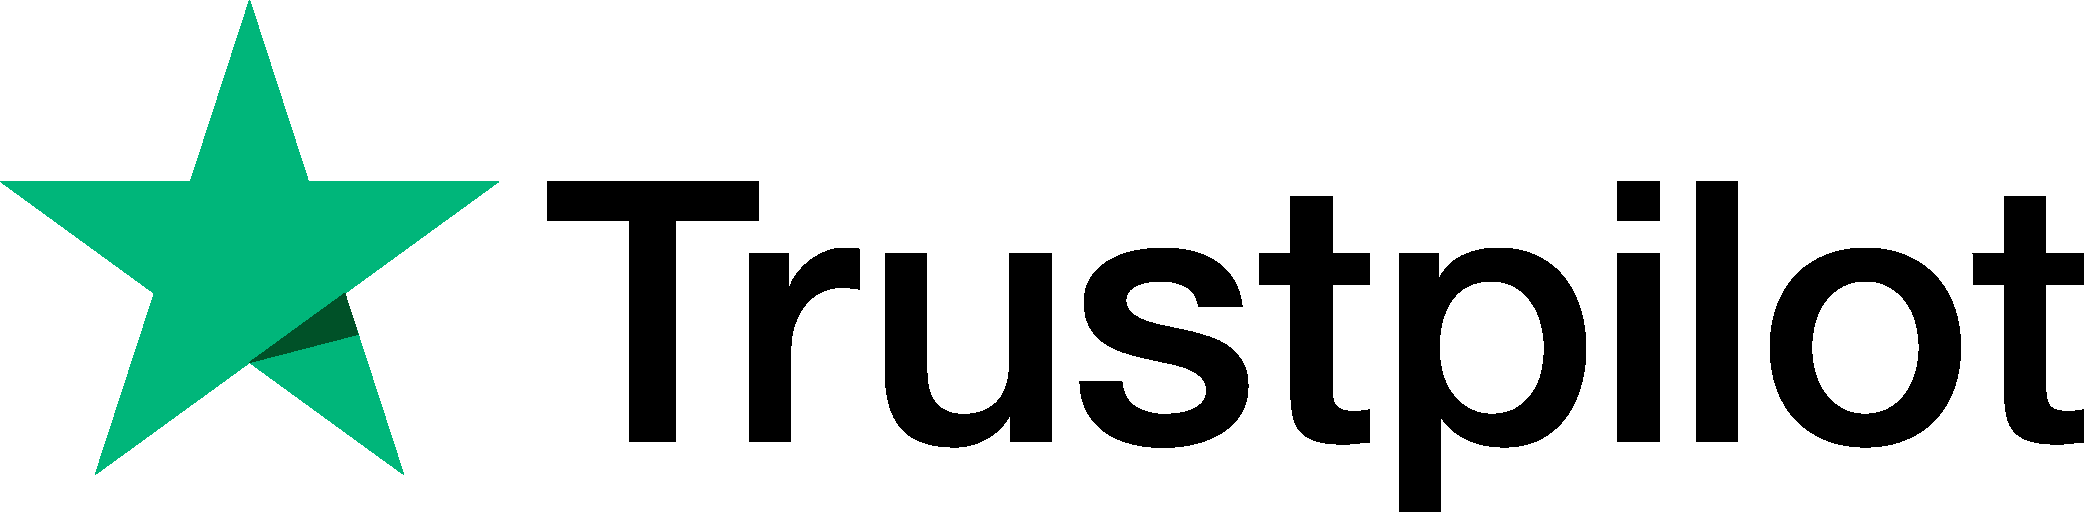 Trustpilot Logo png